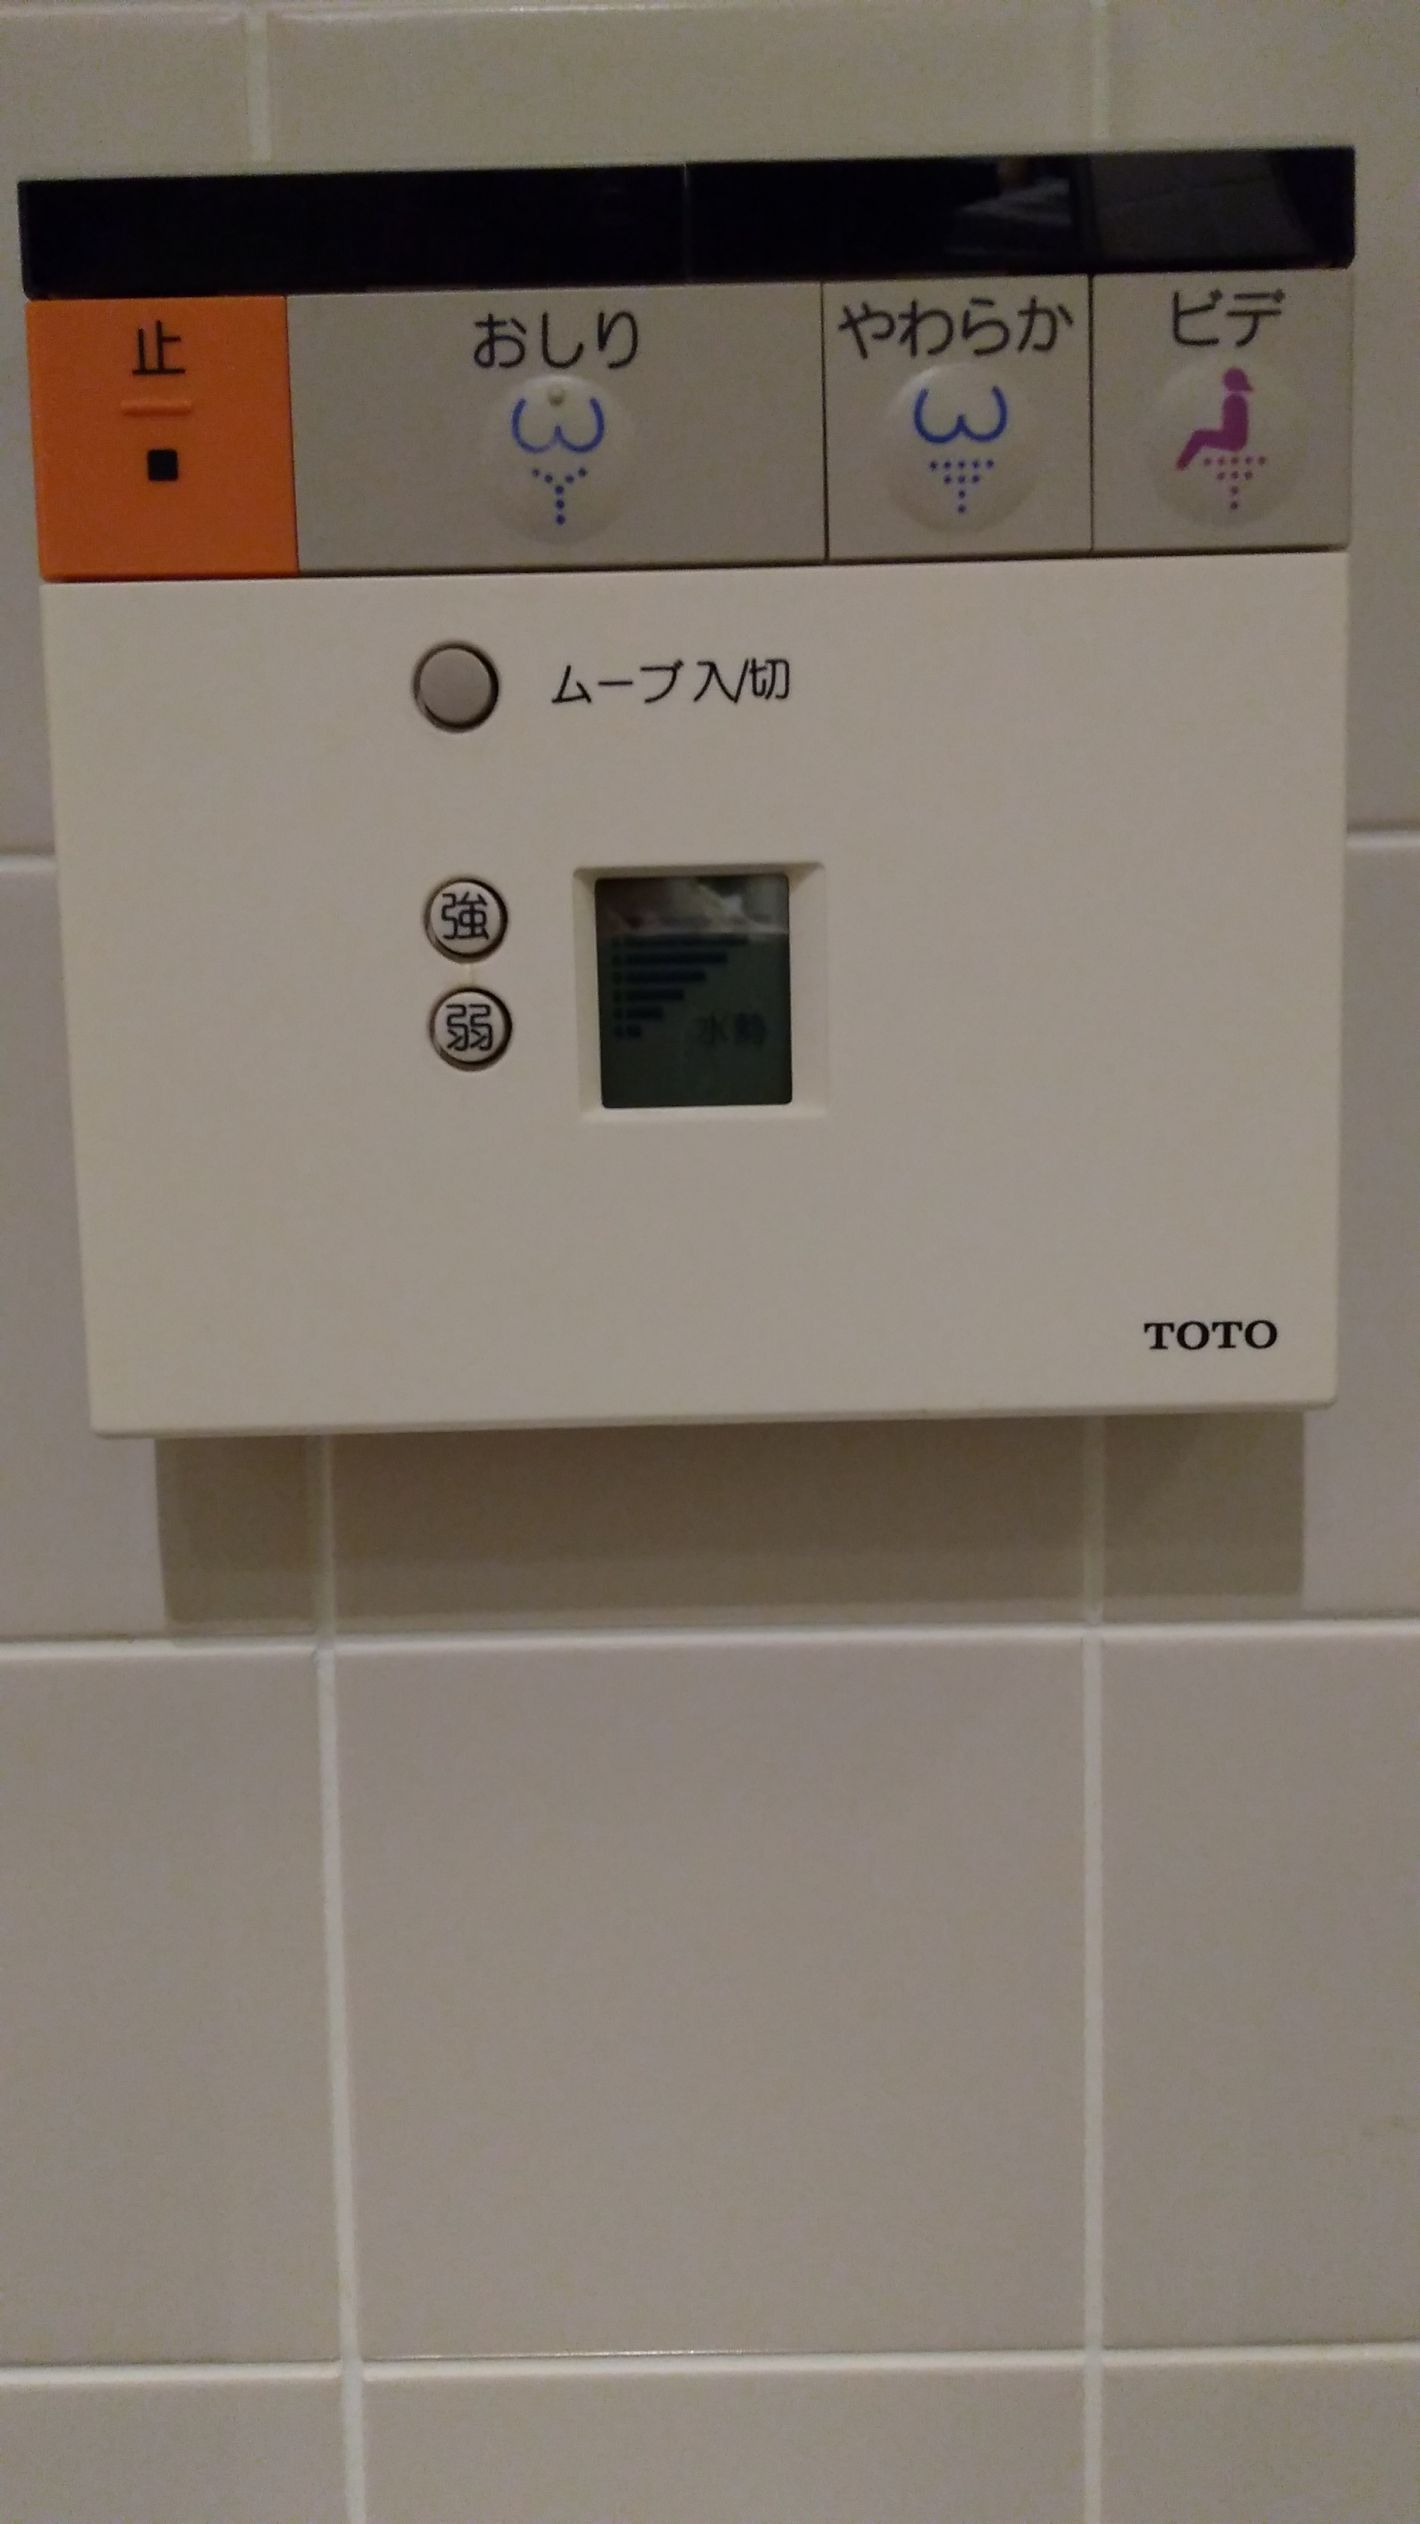 Japanese toilet control Blank Meme Template